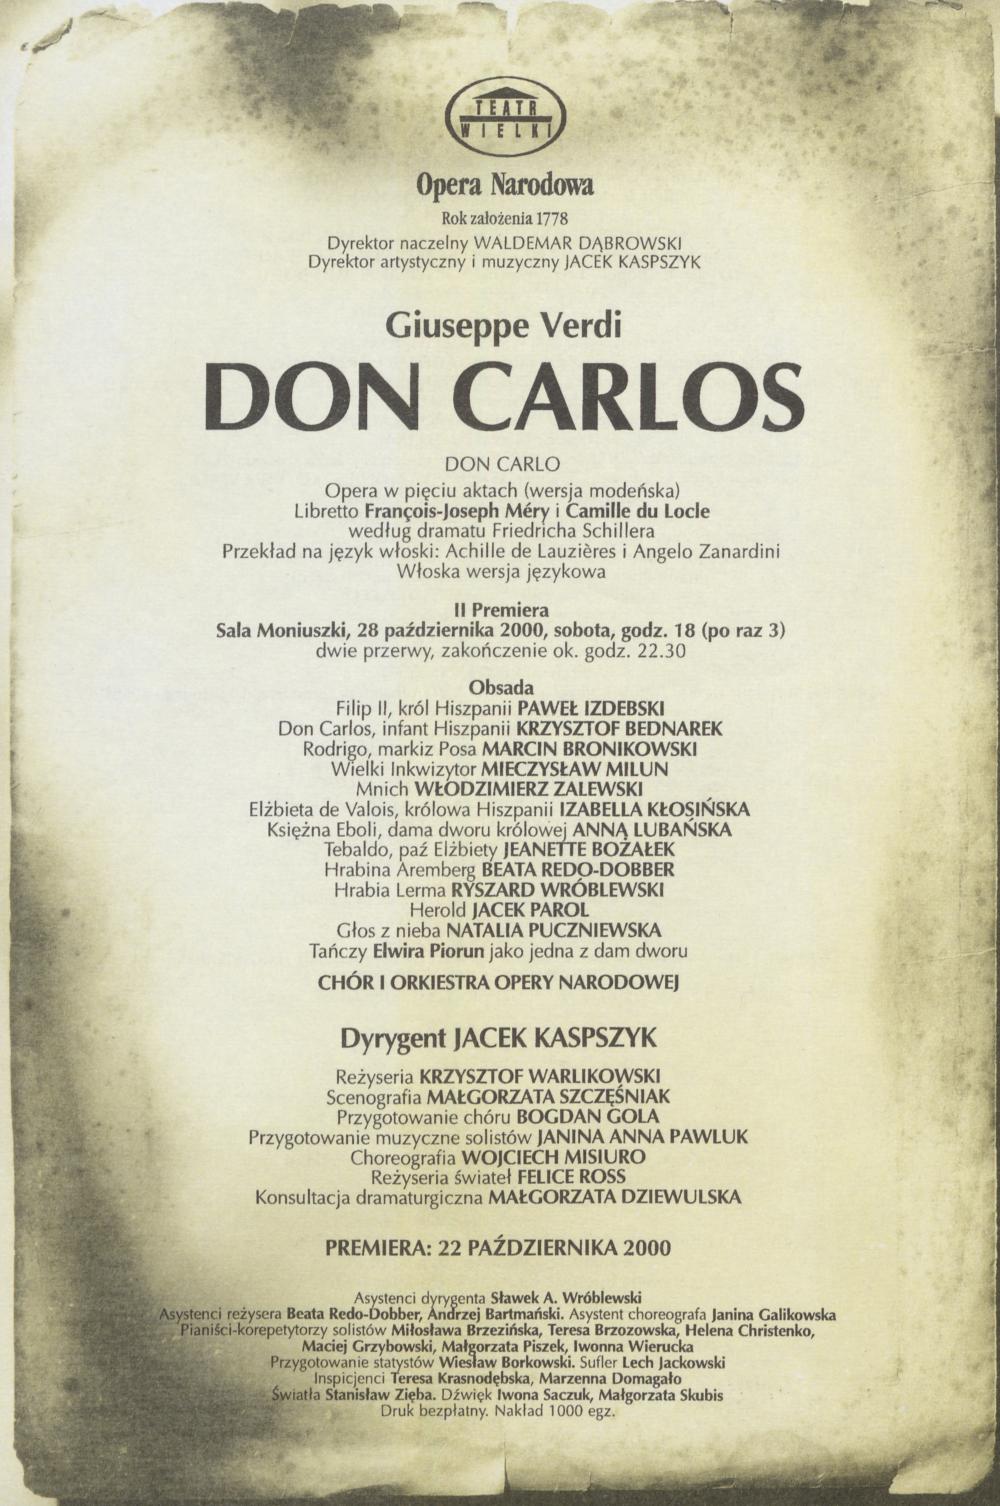 Wkładka obsadowa „Don Carlos” Giuseppe Verdi 28-10-2000